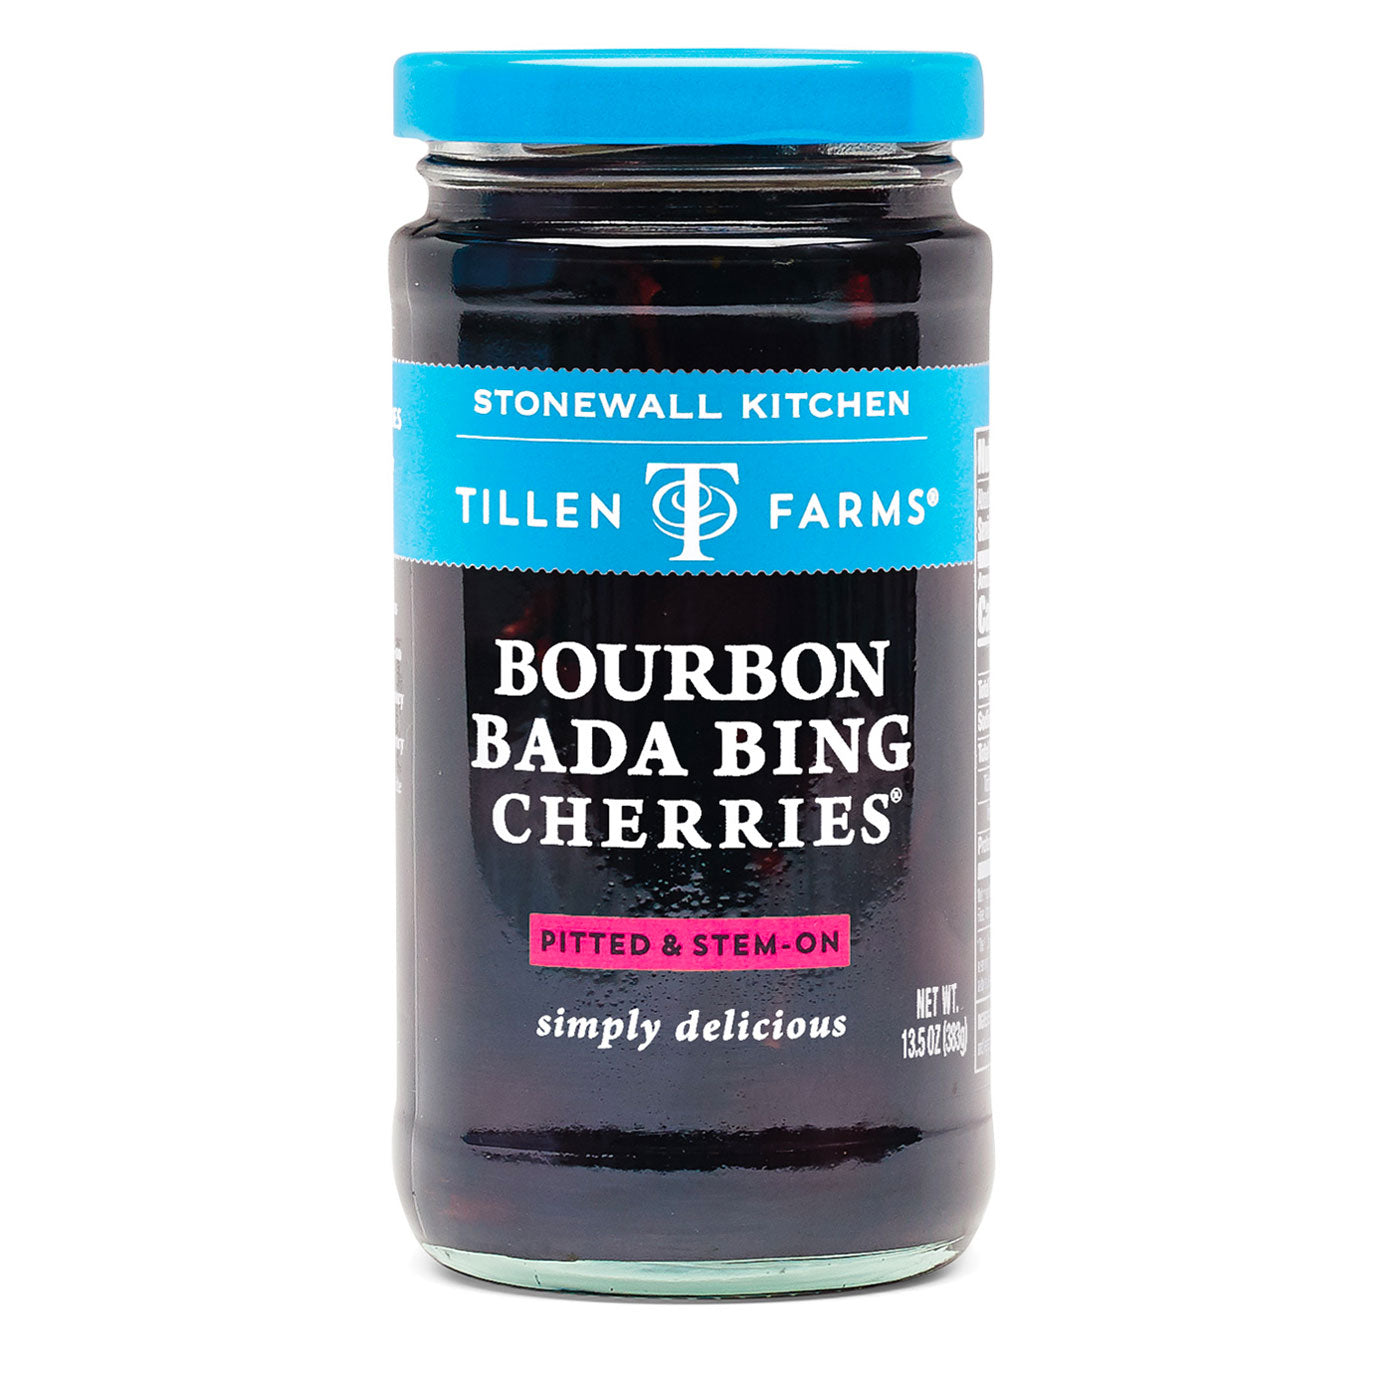 Tillen Farms' Bourbon Bada Bing Cherries